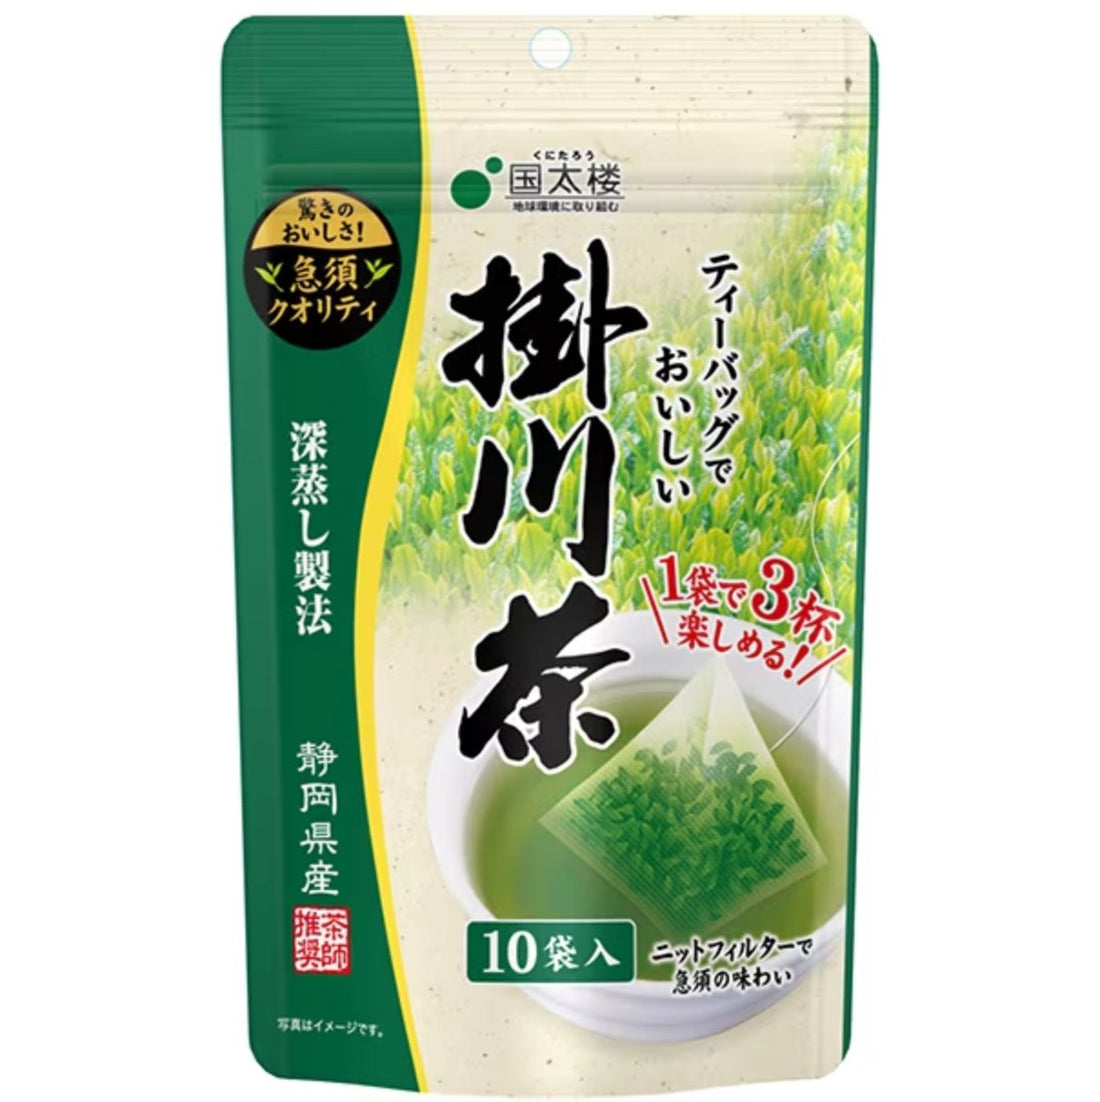 Kunitaro Delicious deep steamed Kakegawa tea 3g x 10 bags with tea bags - NihonMura